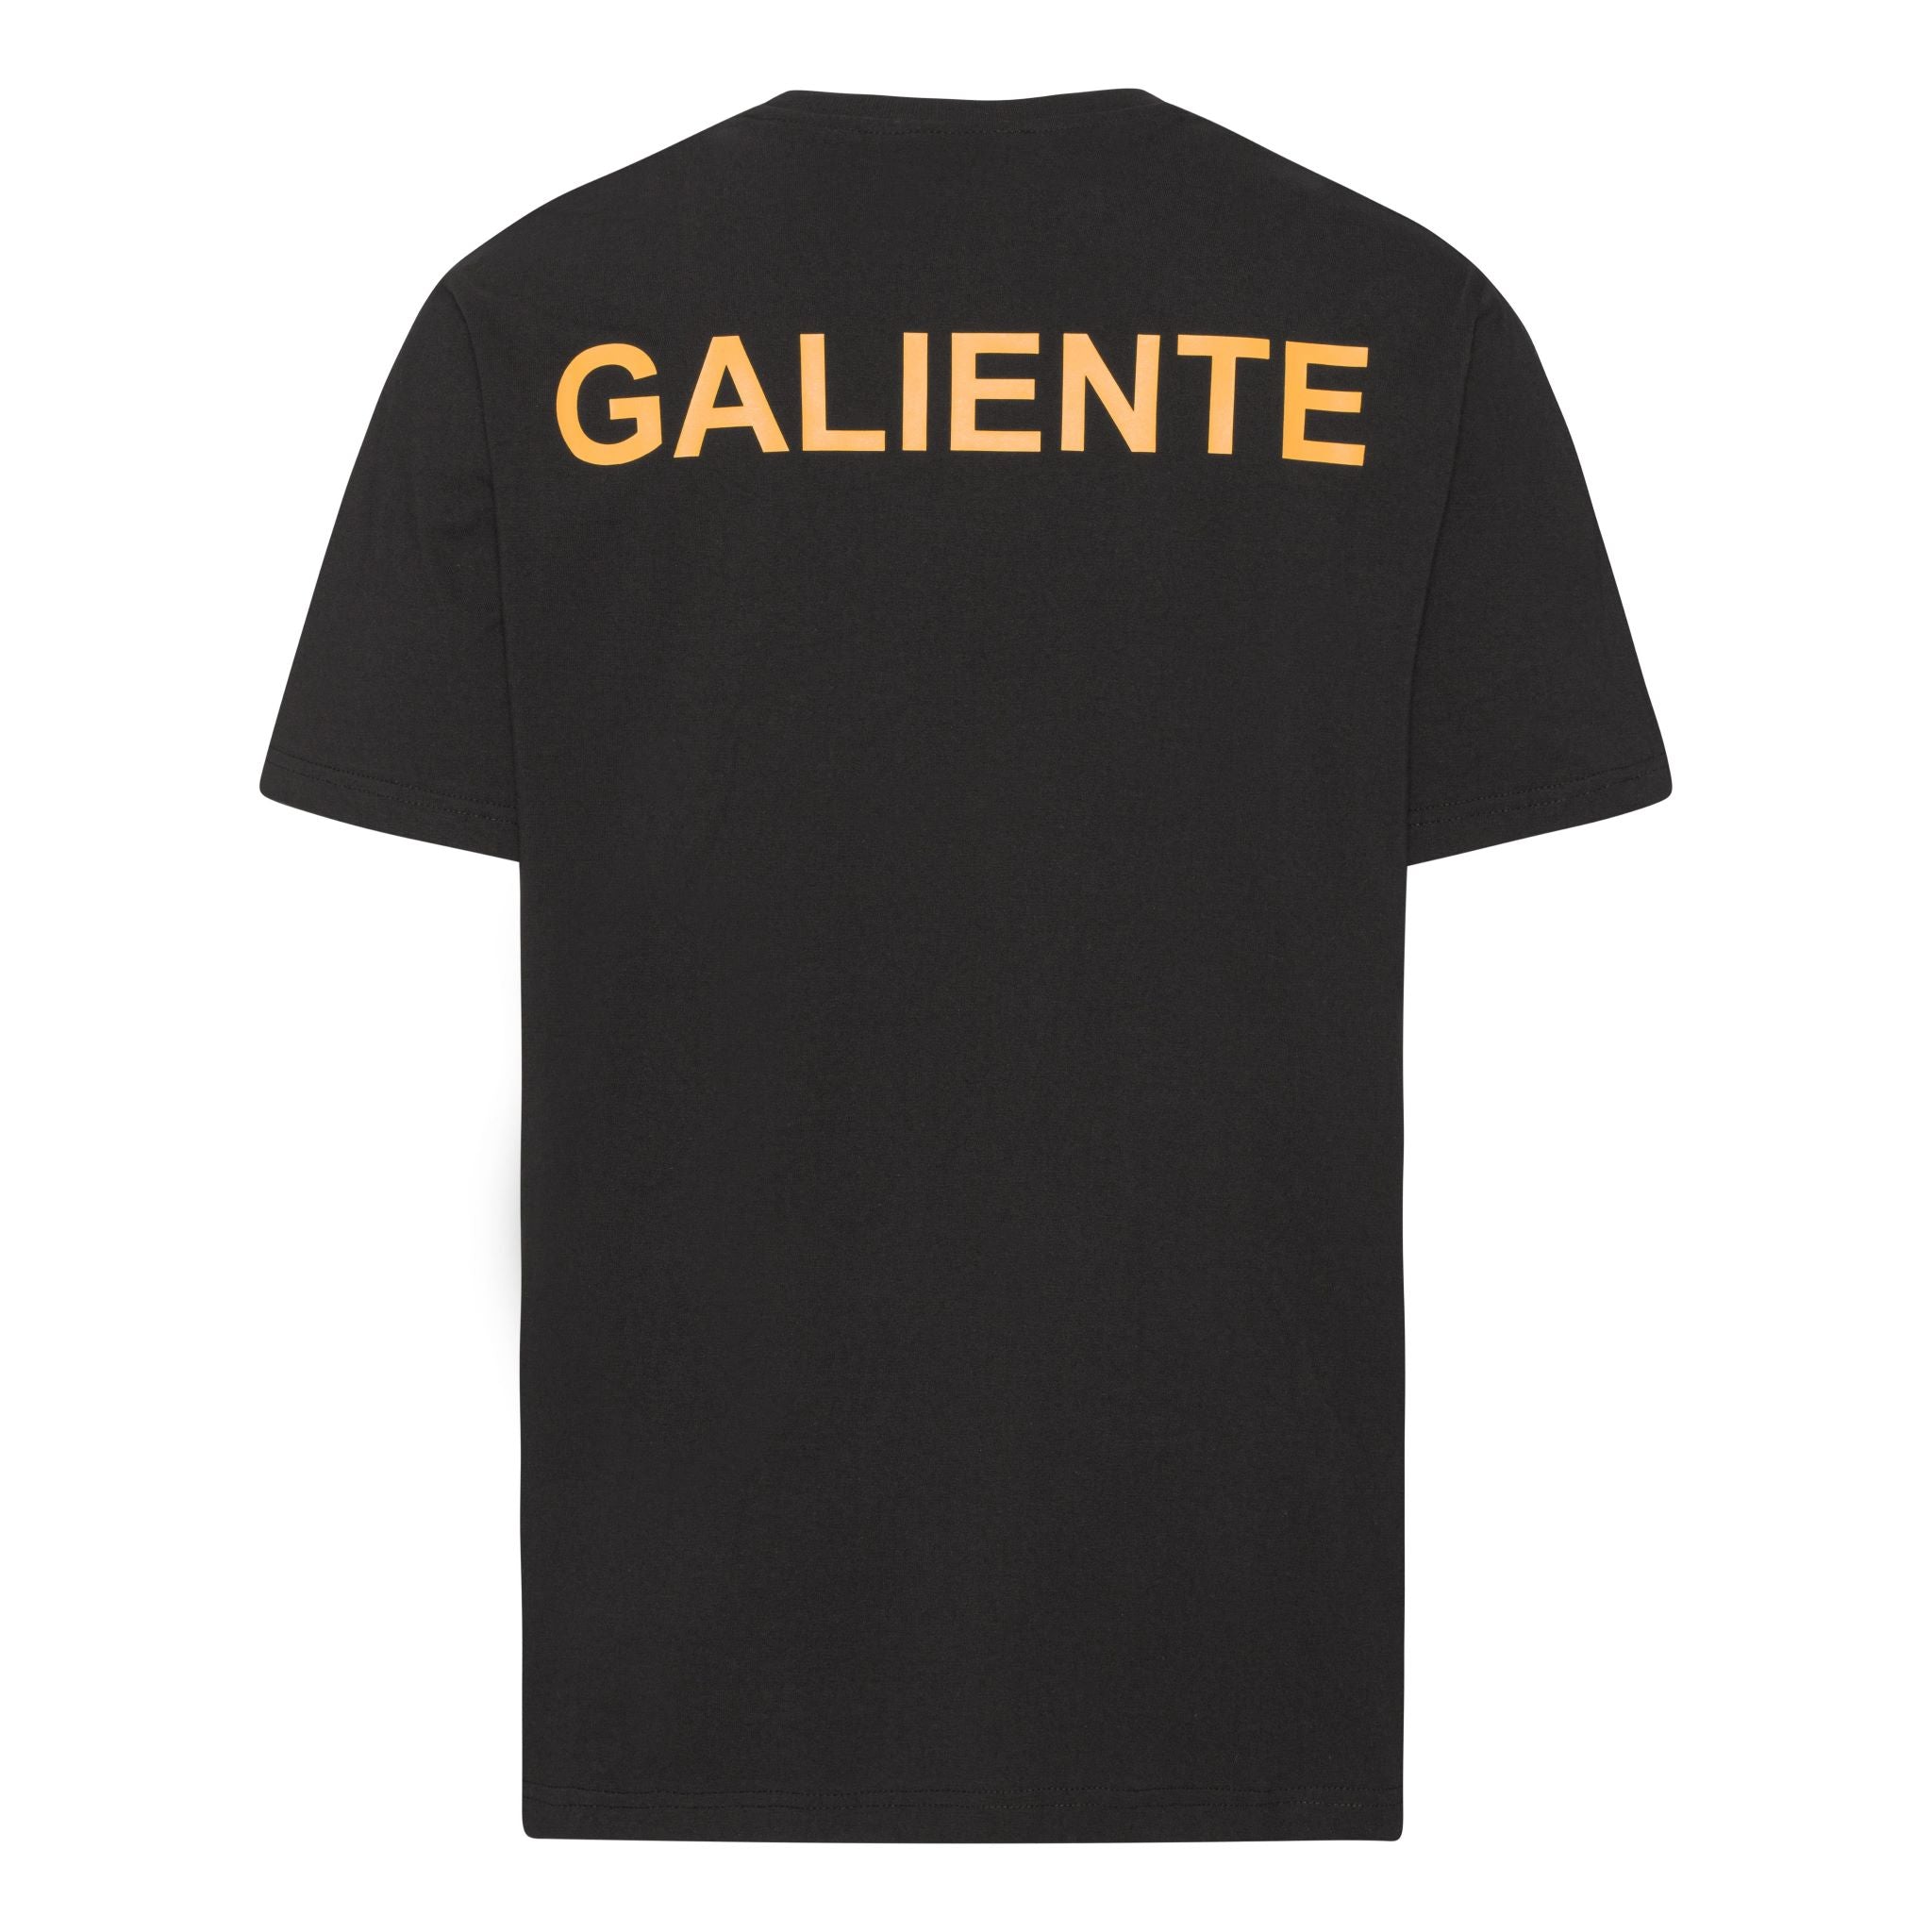 Oversize black T-shirt with yellow logo print